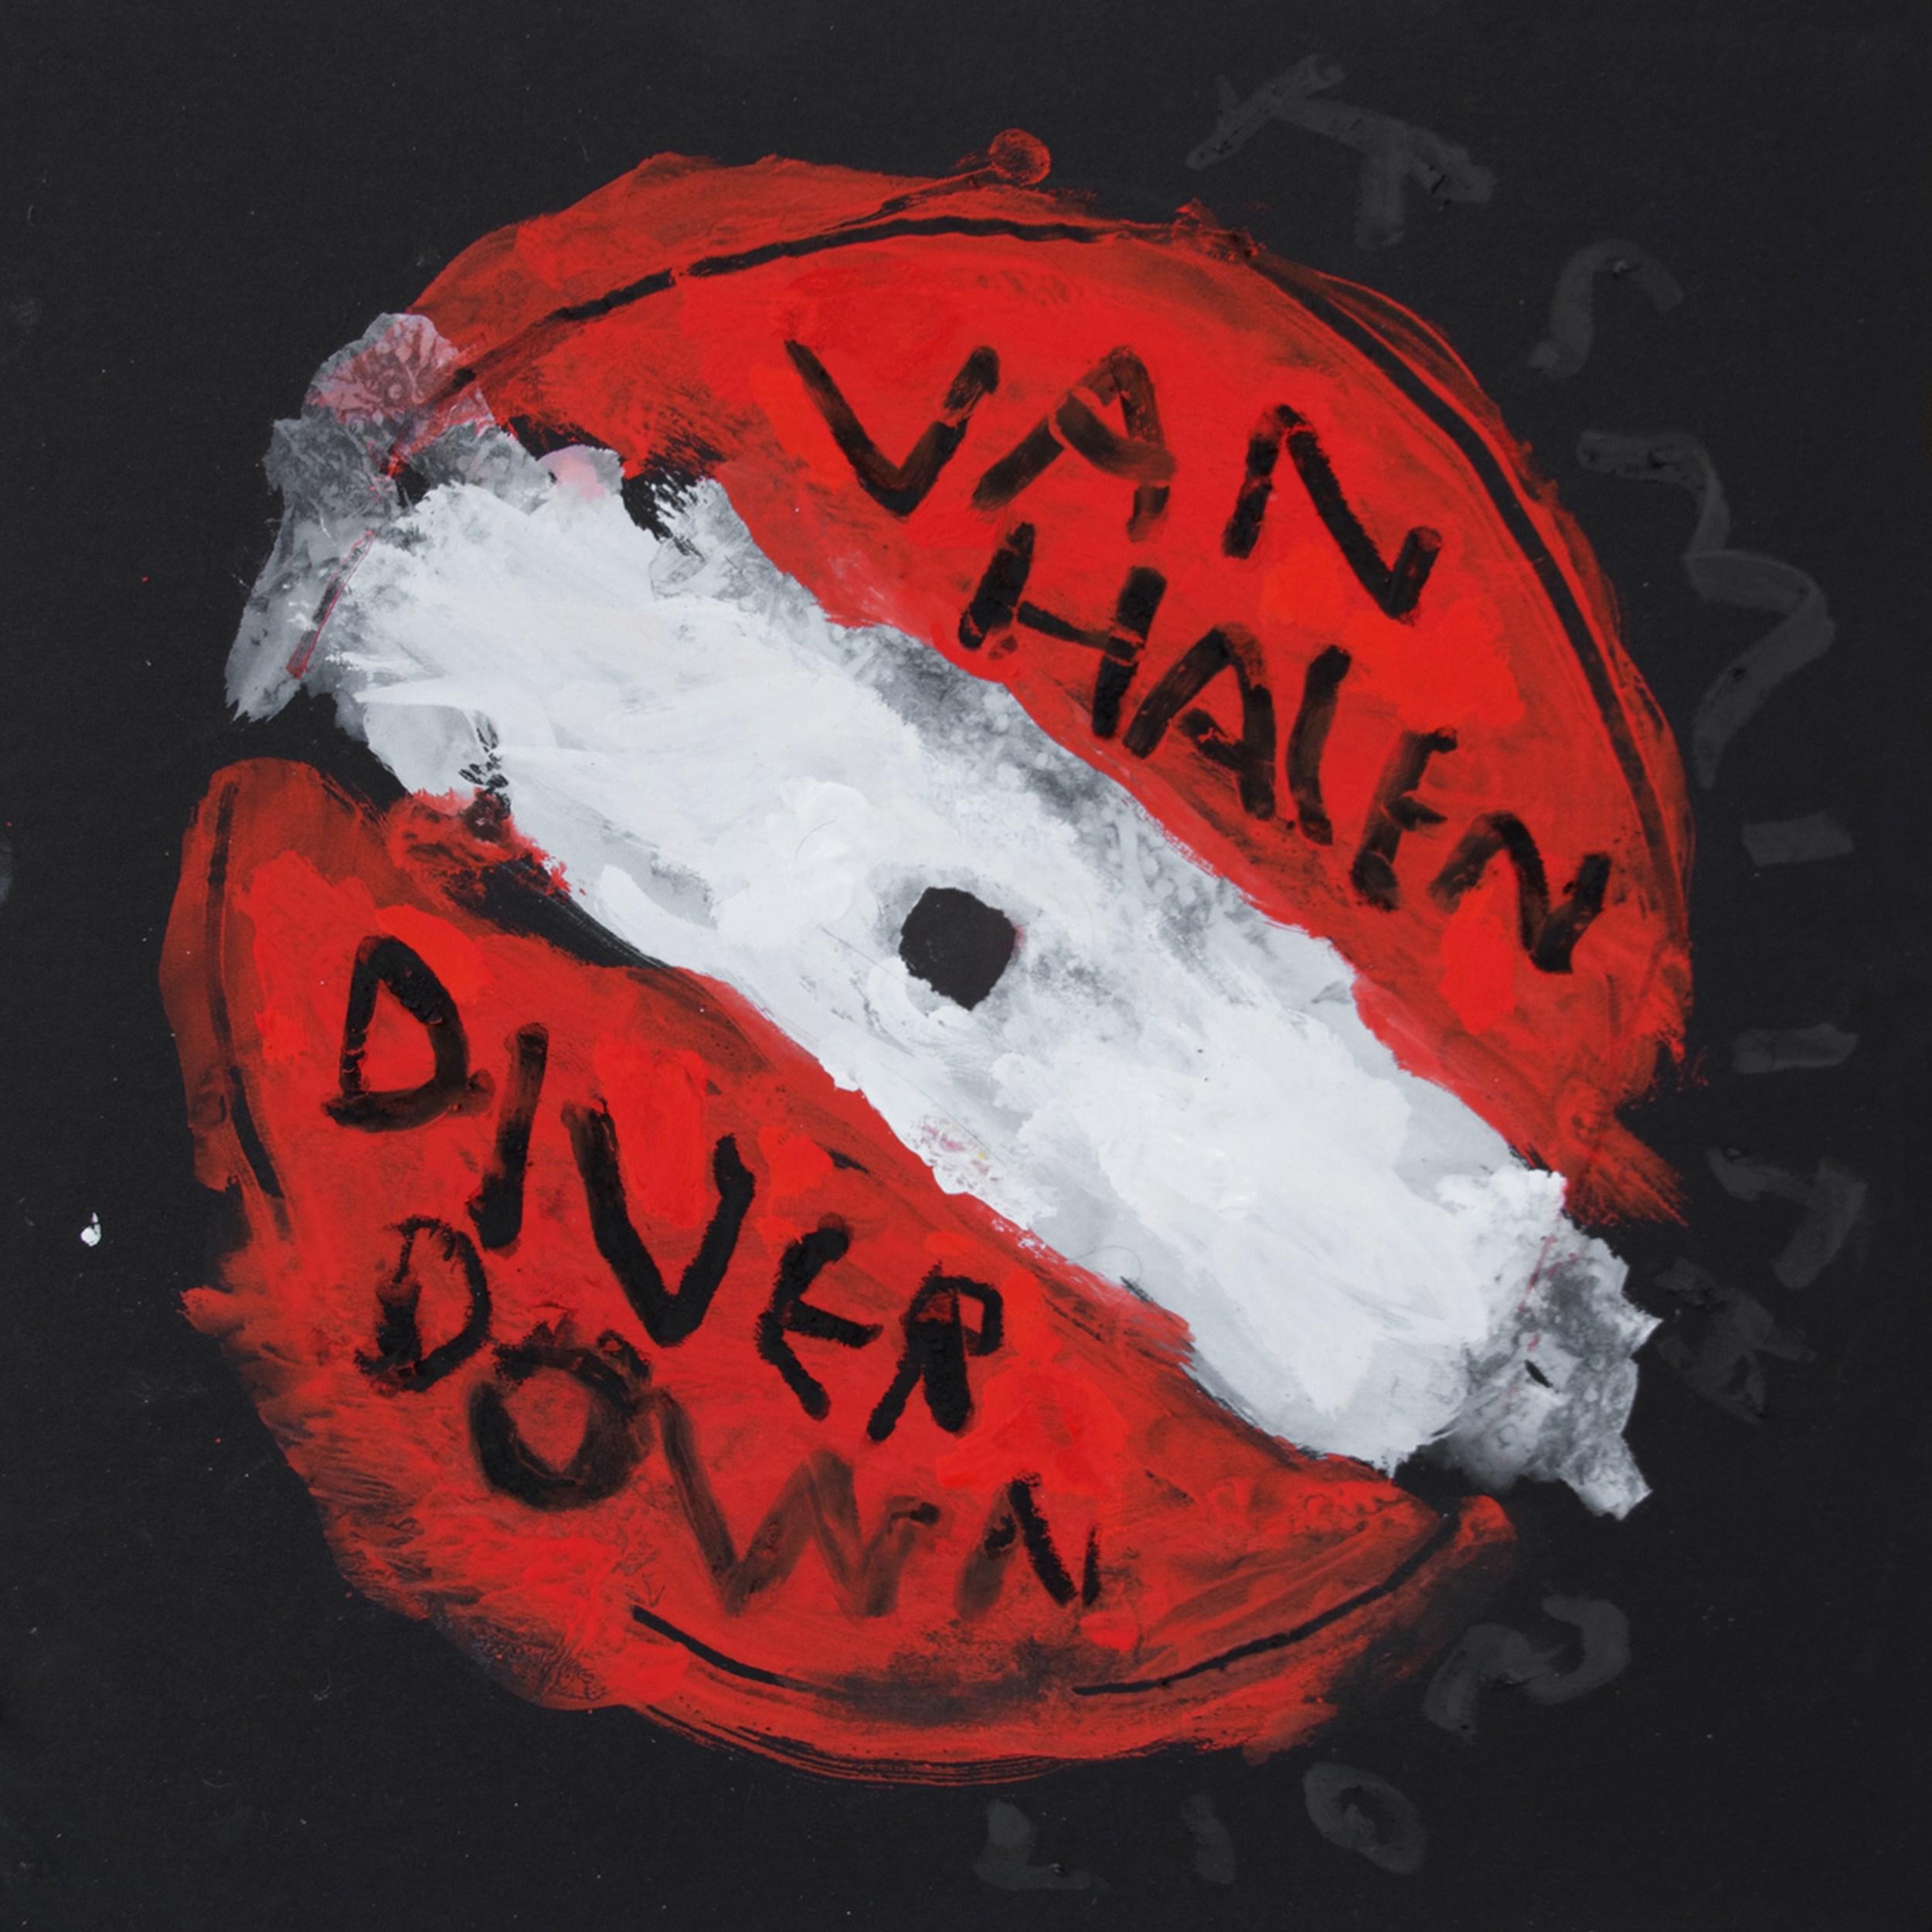 Van Halen - Diver Down (Record Label, Setlists, Contemporary Pop Art)